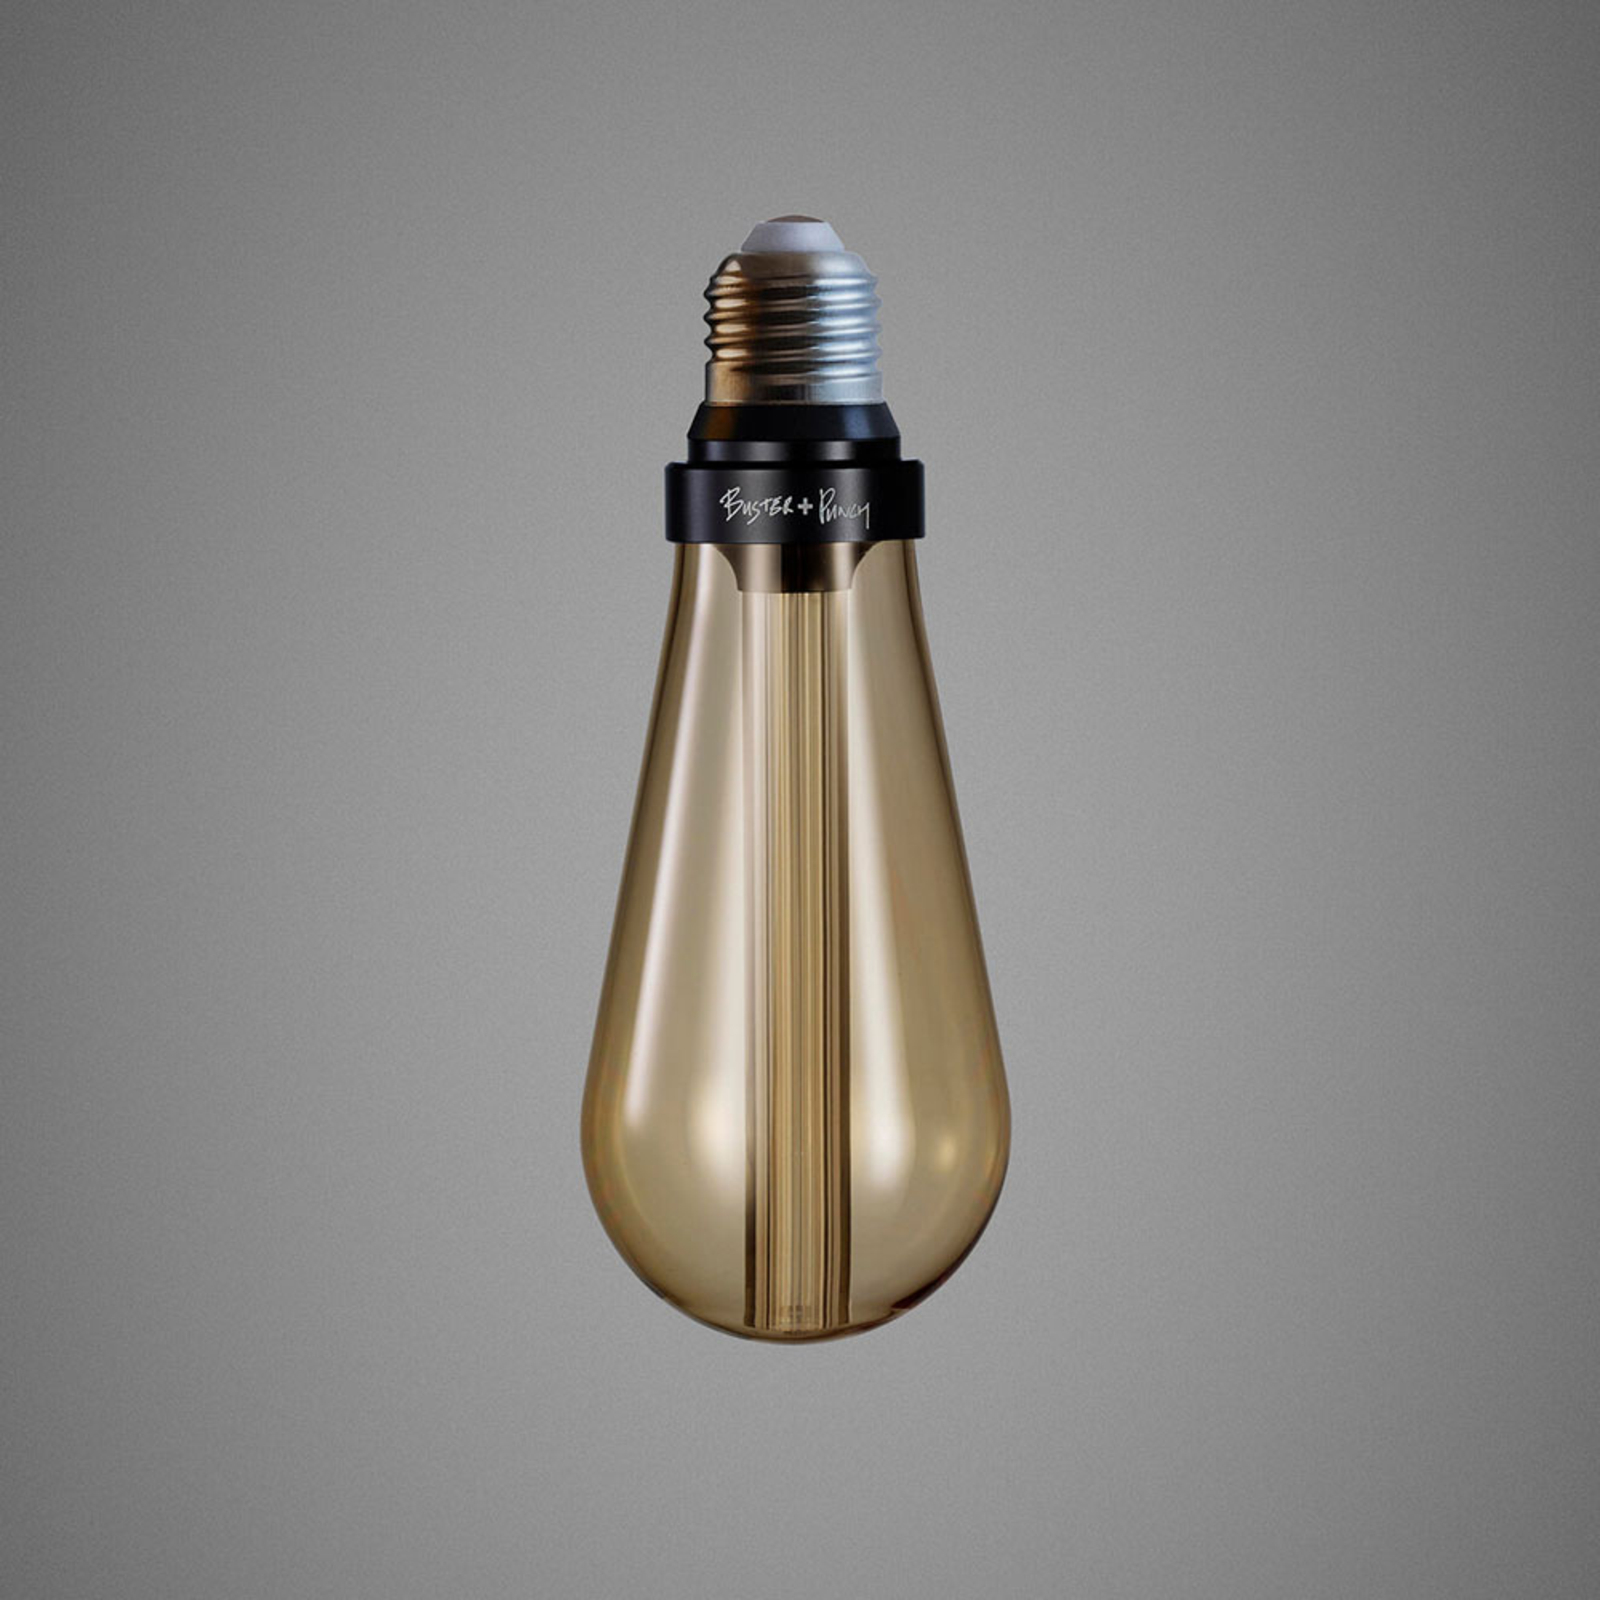 Buster + Punch LED lamp E27 2W dimbaar goud